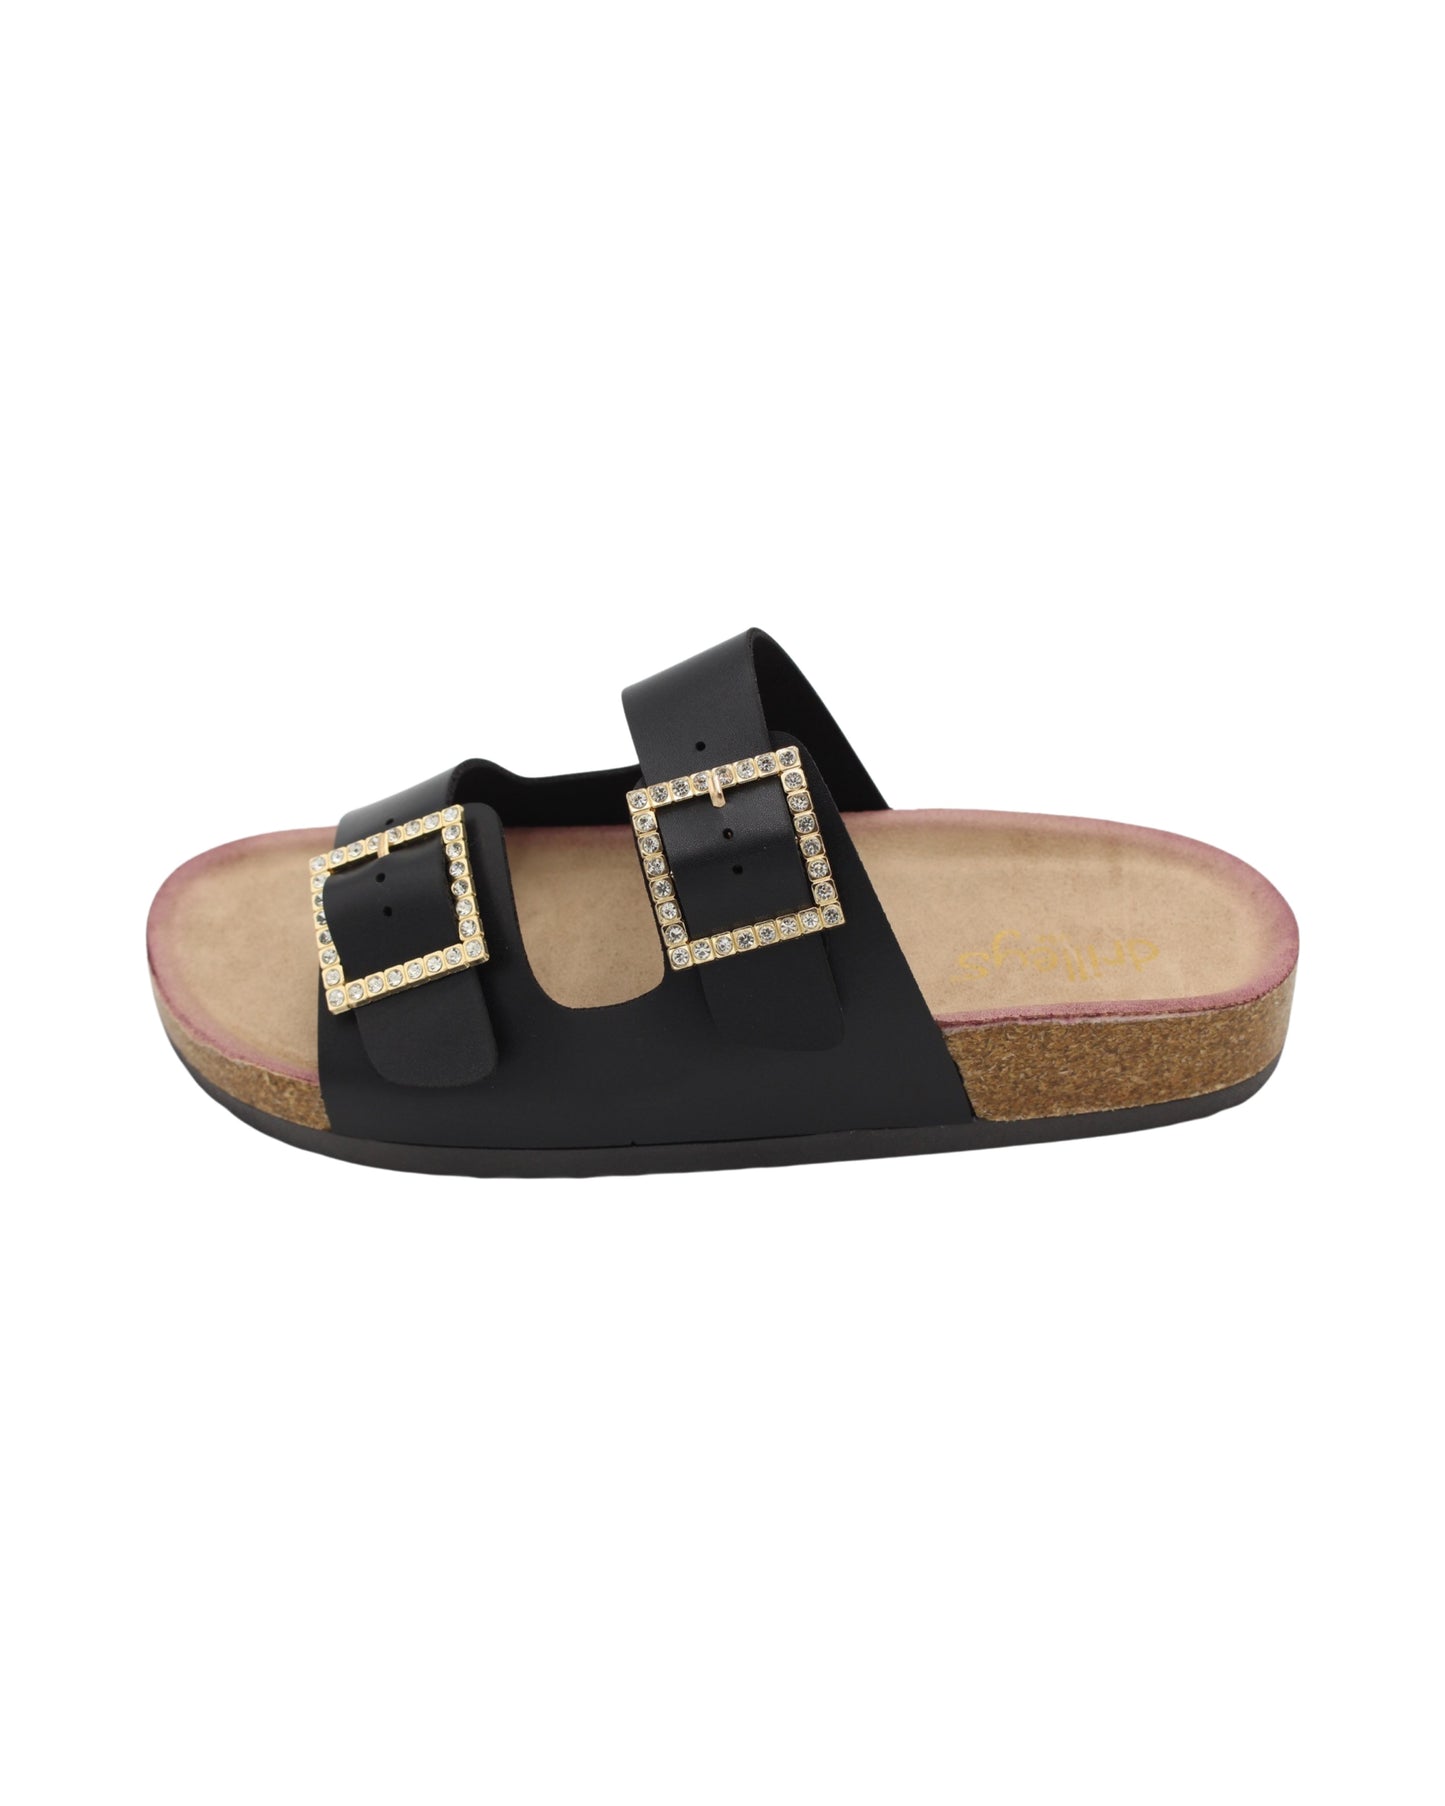 Drilleys - Ladies Shoes Sandals Black (2398)